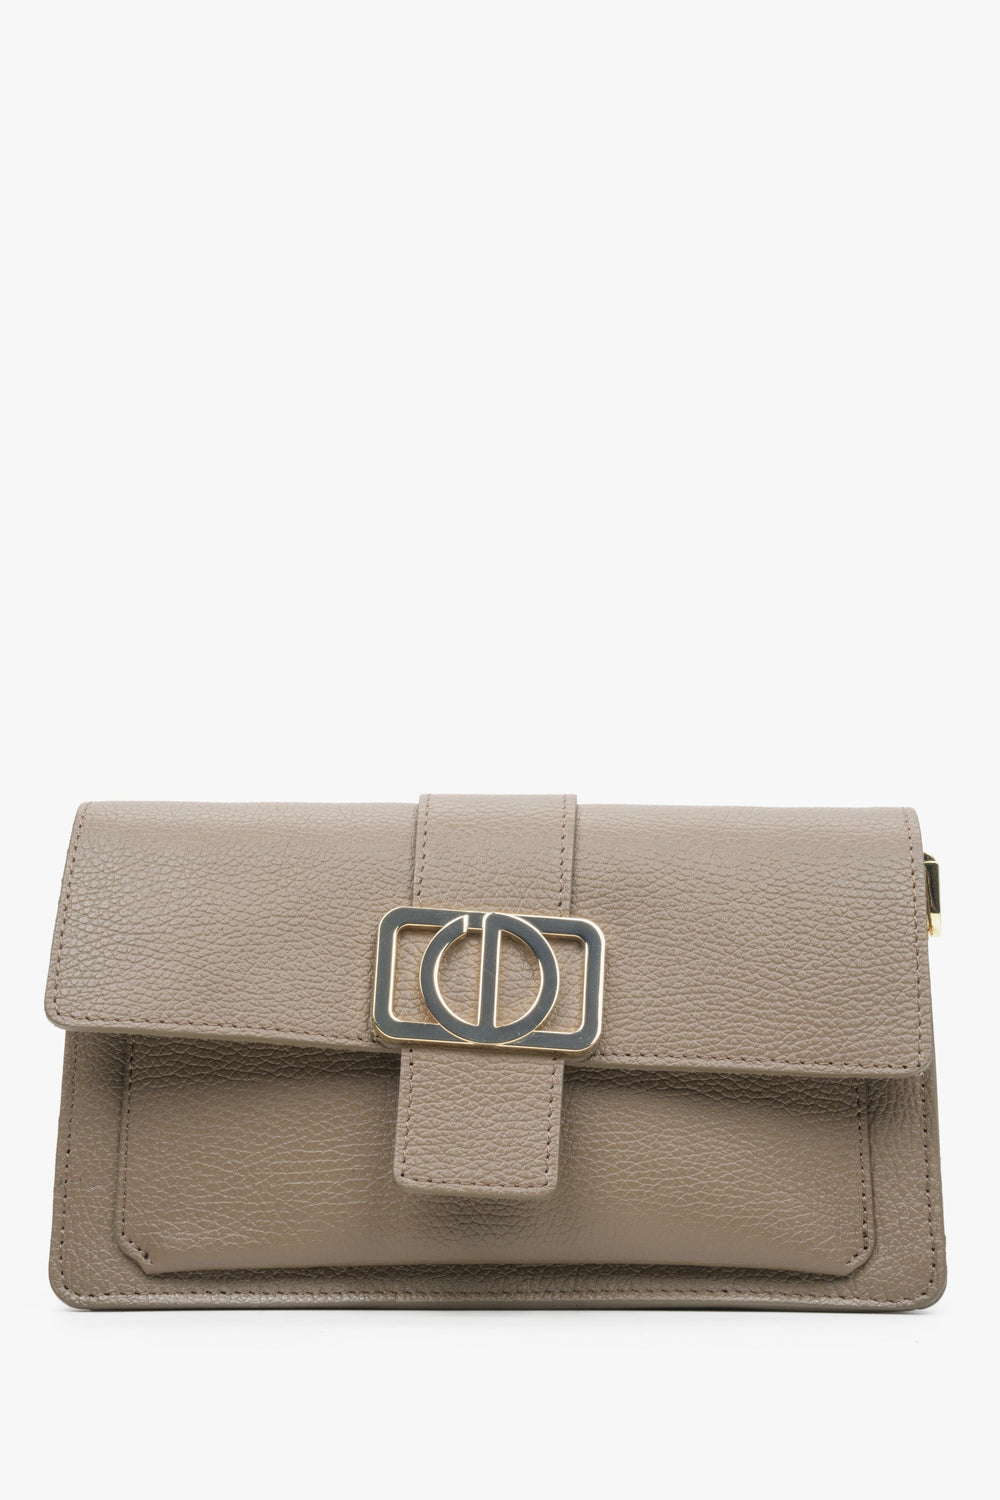 Women's Brown Shoulder Bag with Gold Hardware made of Genuine Leather Estro ER00113699.